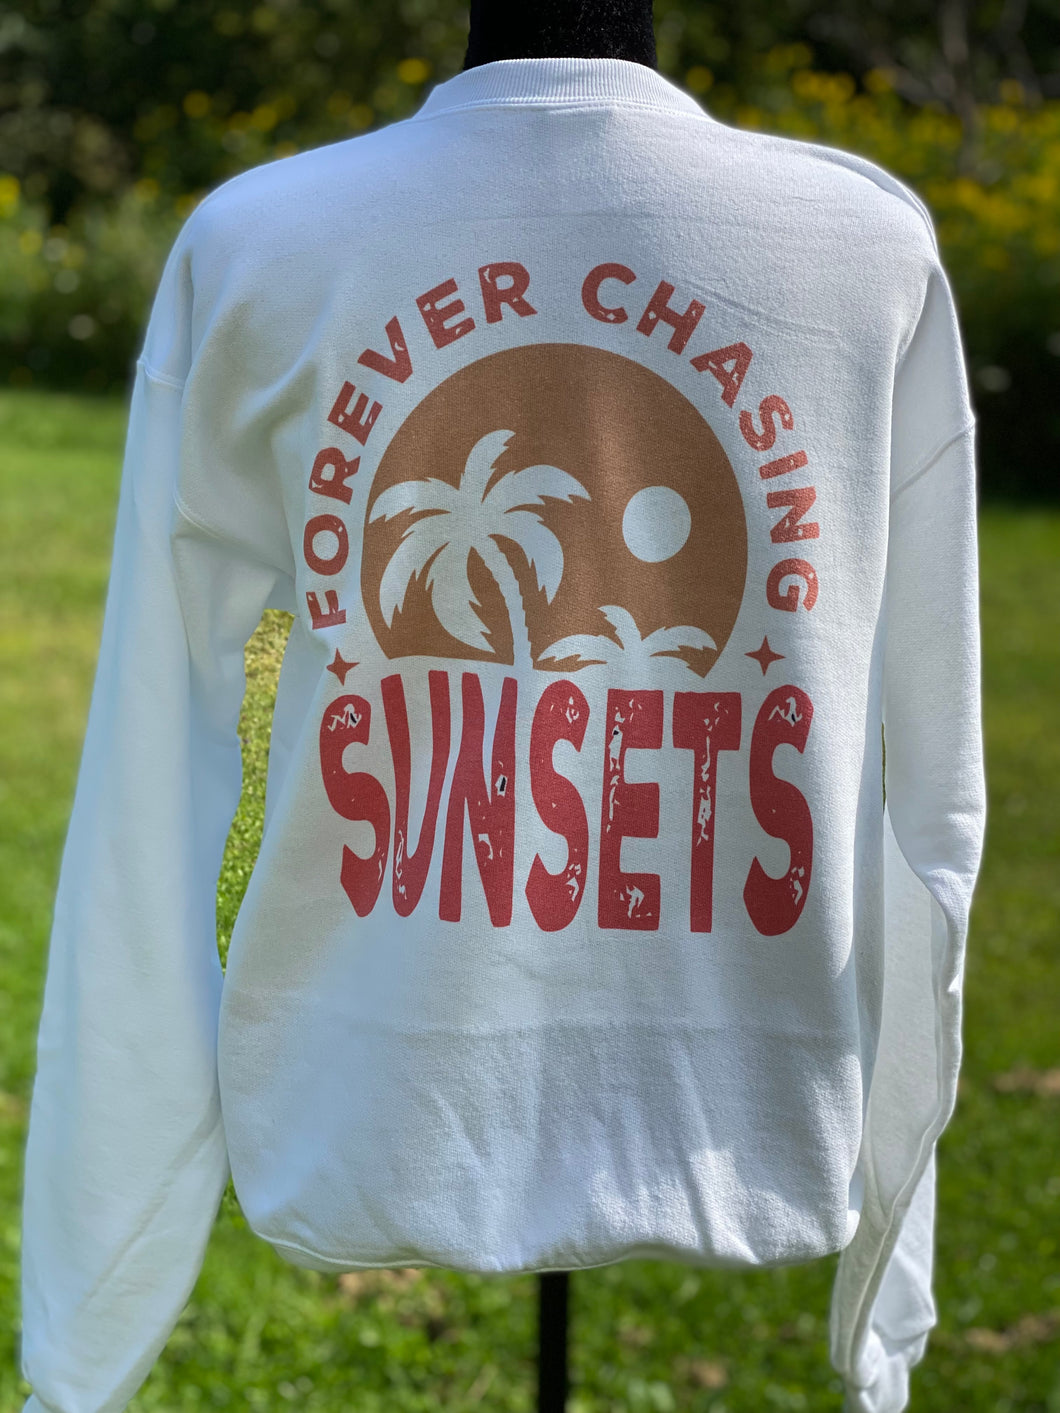 Chasing Sunsets Sweatshirt